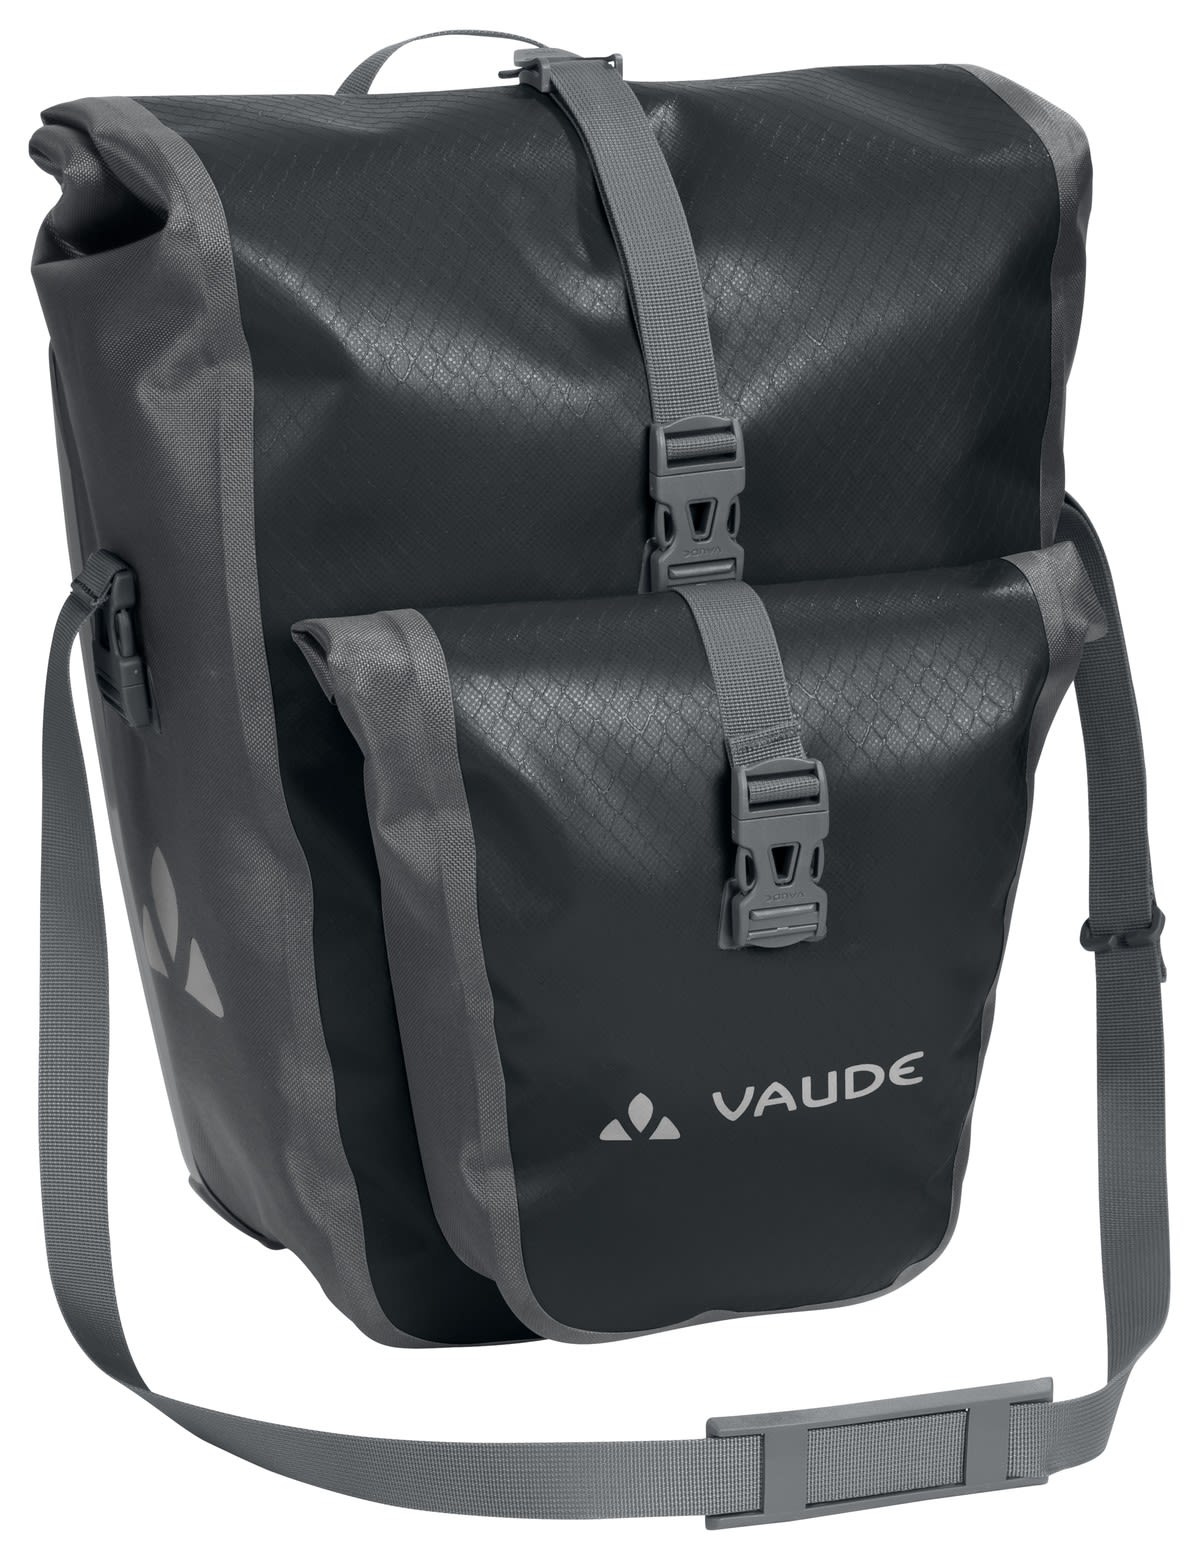 Vaude Aqua Back Plus Single Schwarz- Taschen- Grsse 25l - Farbe Black